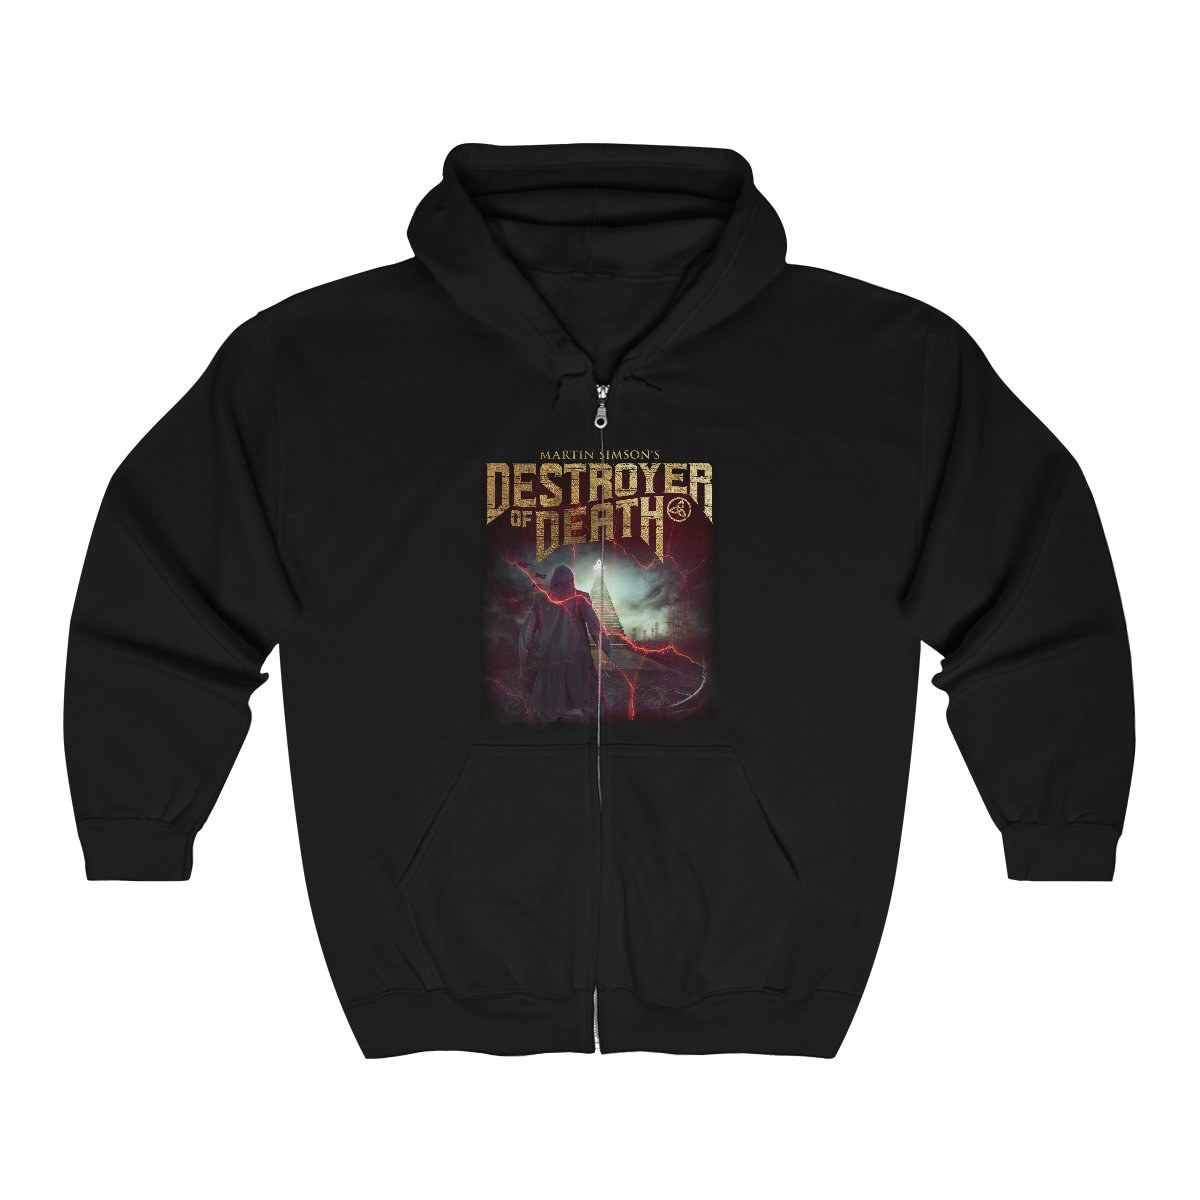 Martin Simson’s Destroyer of Death Full Zip Hooded Sweatshirt